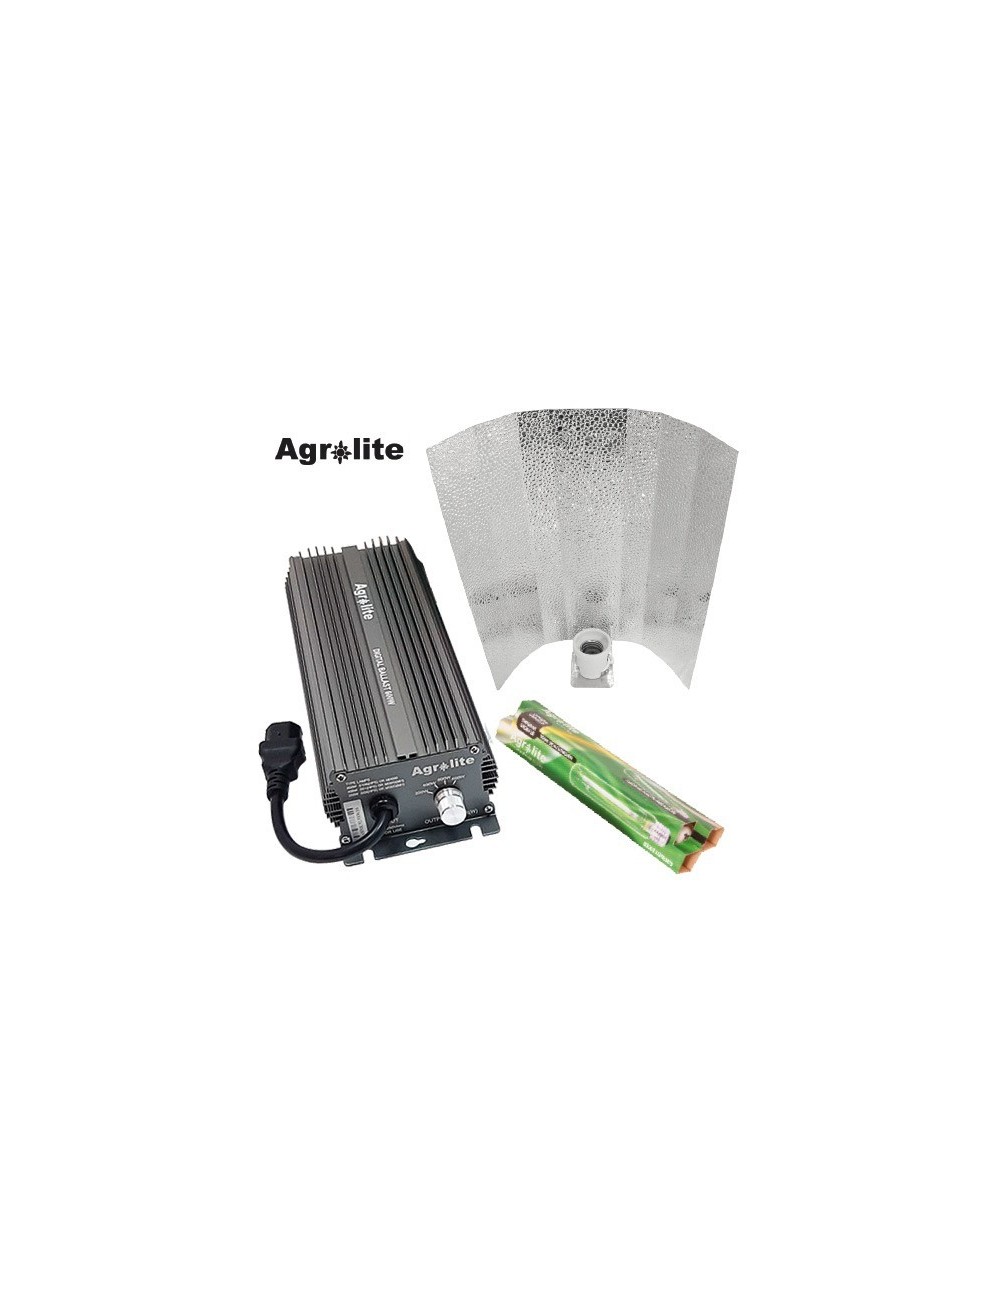 Kit de iluminación electrónico Agrolite 600W Reflector Estuco